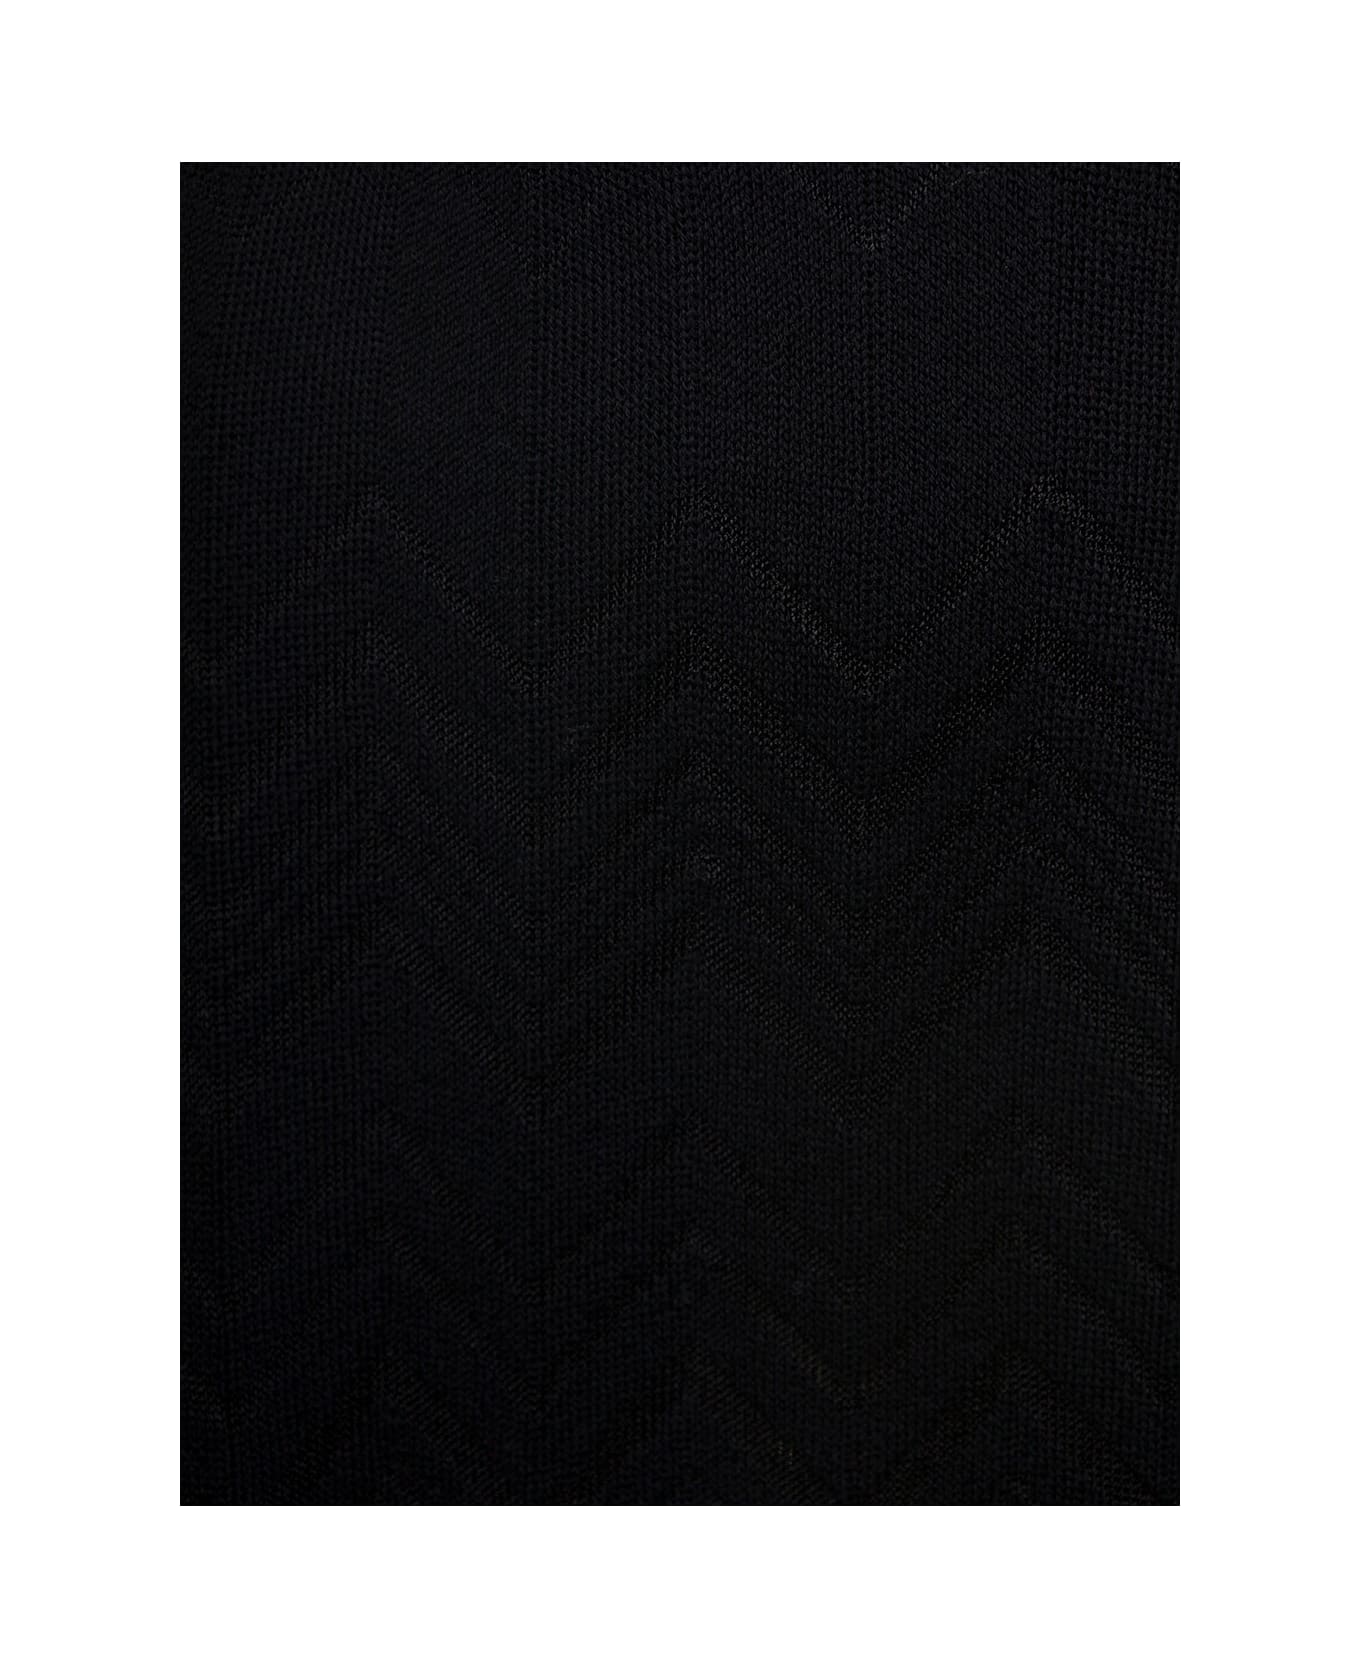 Missoni Wool Viscose Solid Colored Chevron Mini Skirt - Black